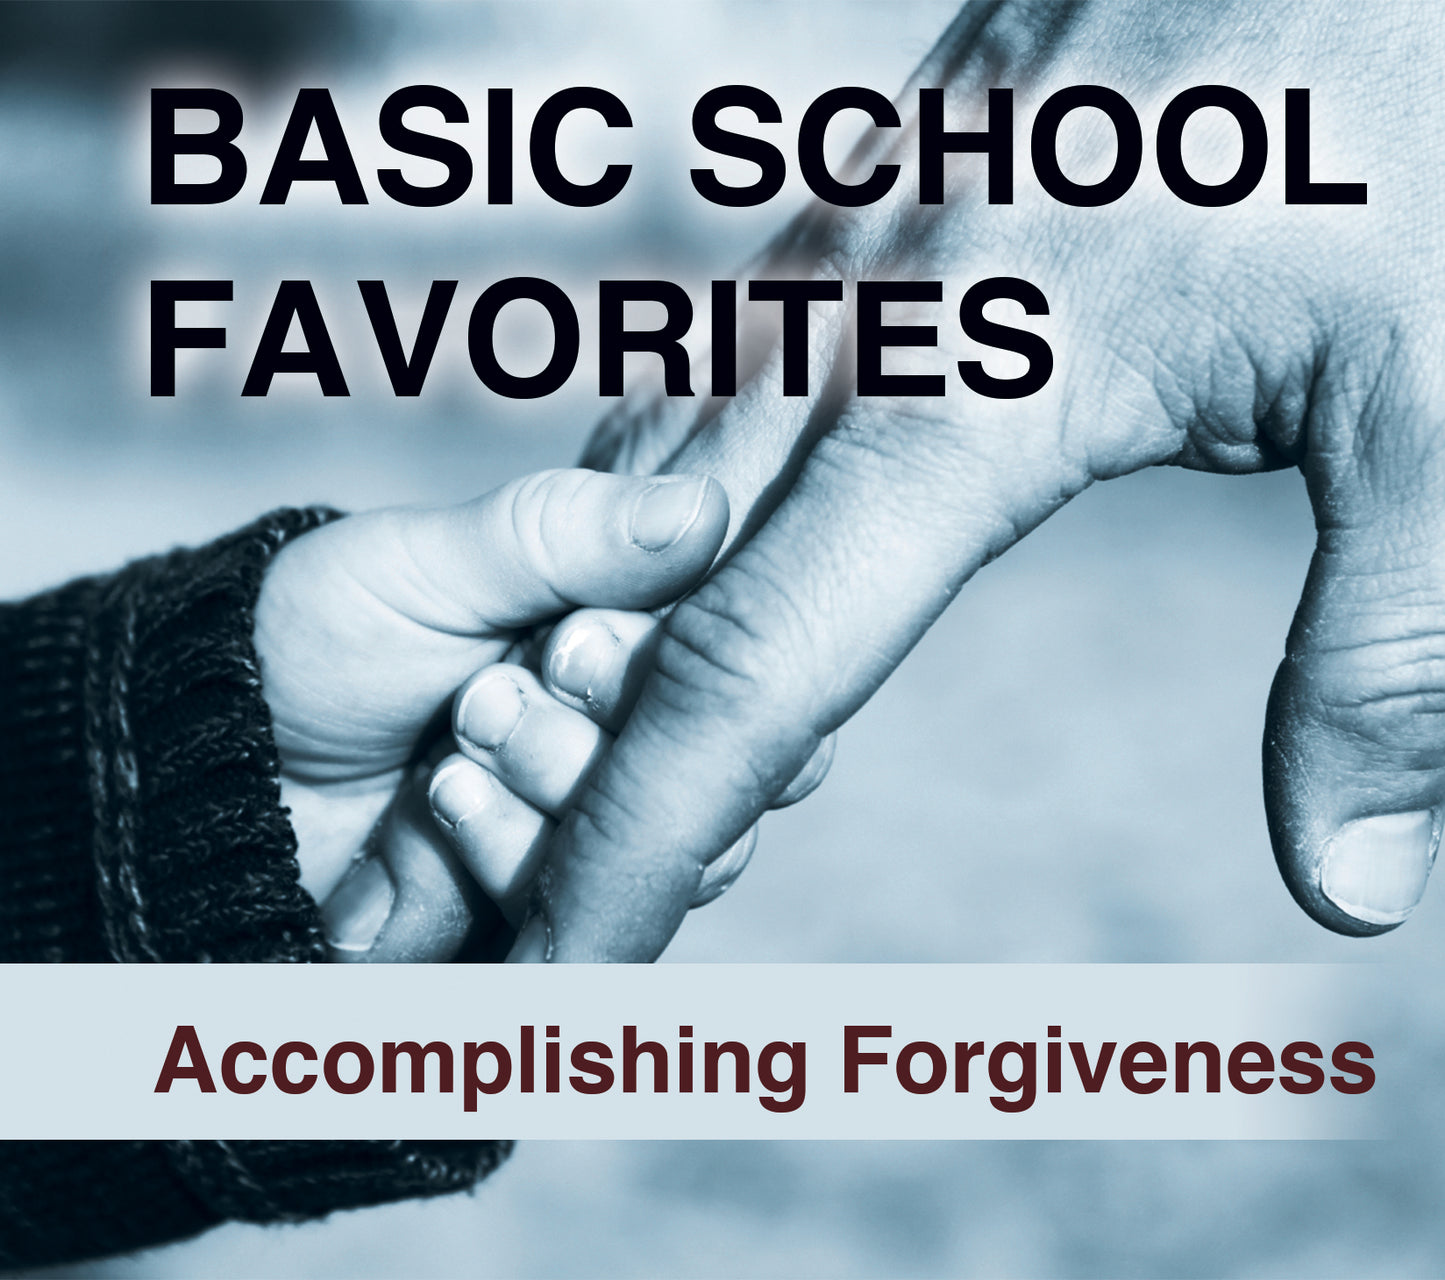 Accomplishing Forgiveness (Basic School Favorites Collection One) - DVD